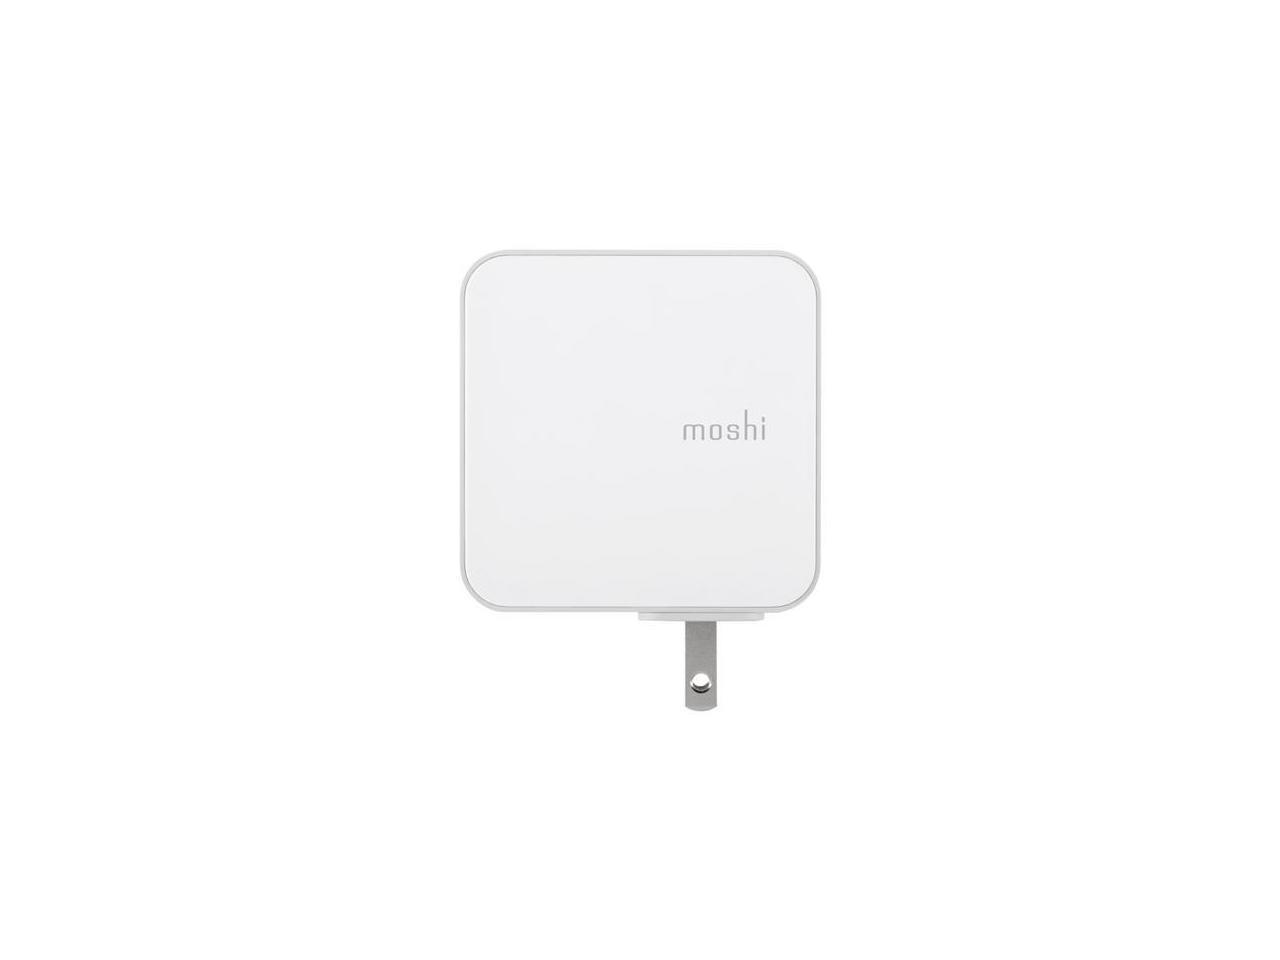 Moshi 42W ProGeo USB-C Wall Charger with USB Port - White